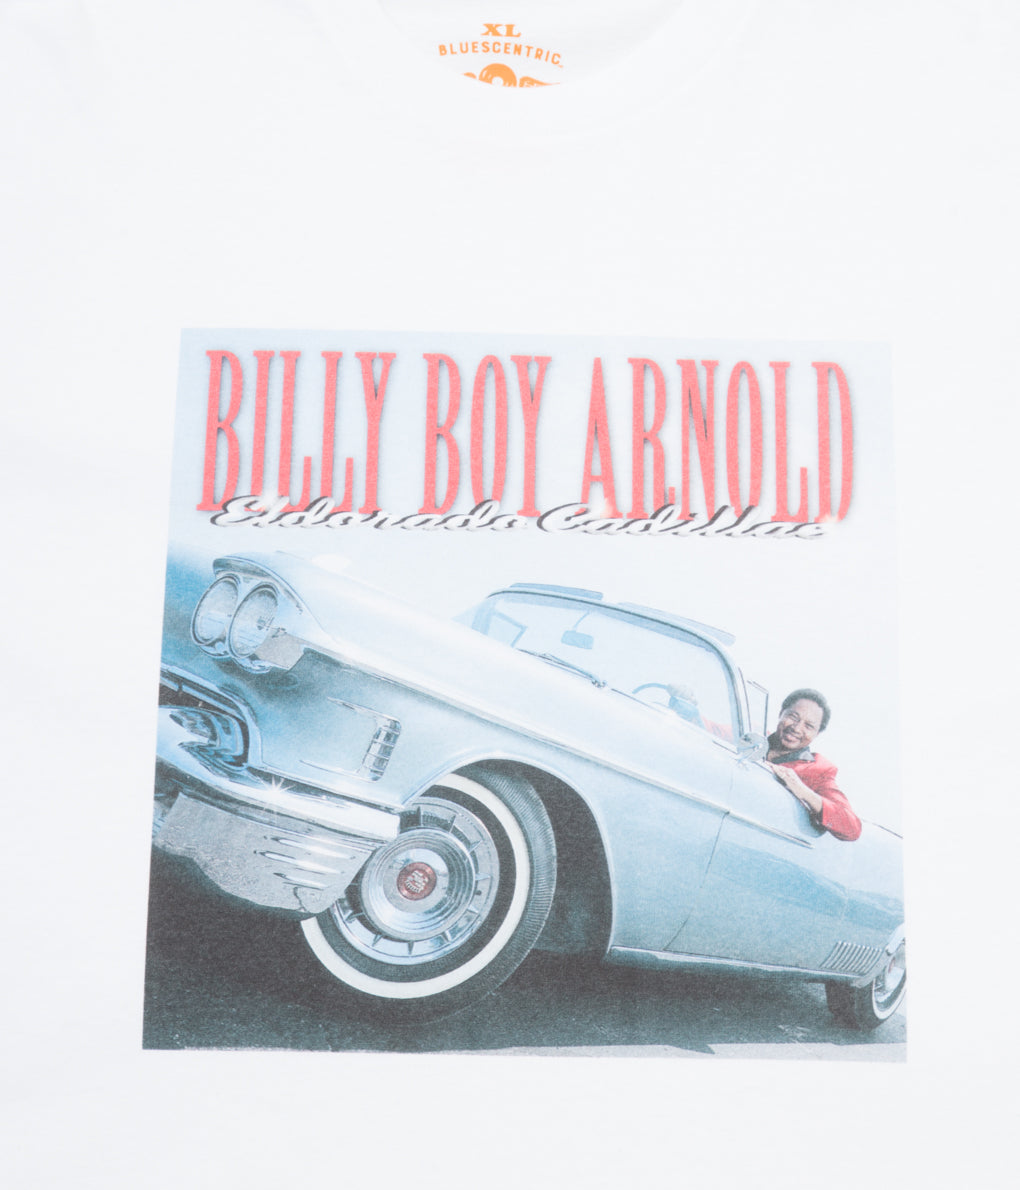 BLUESCENTRIC "BILLY BOY ARNOLD ELDORADO CADILLAC T-SHIRT"(WHITE)